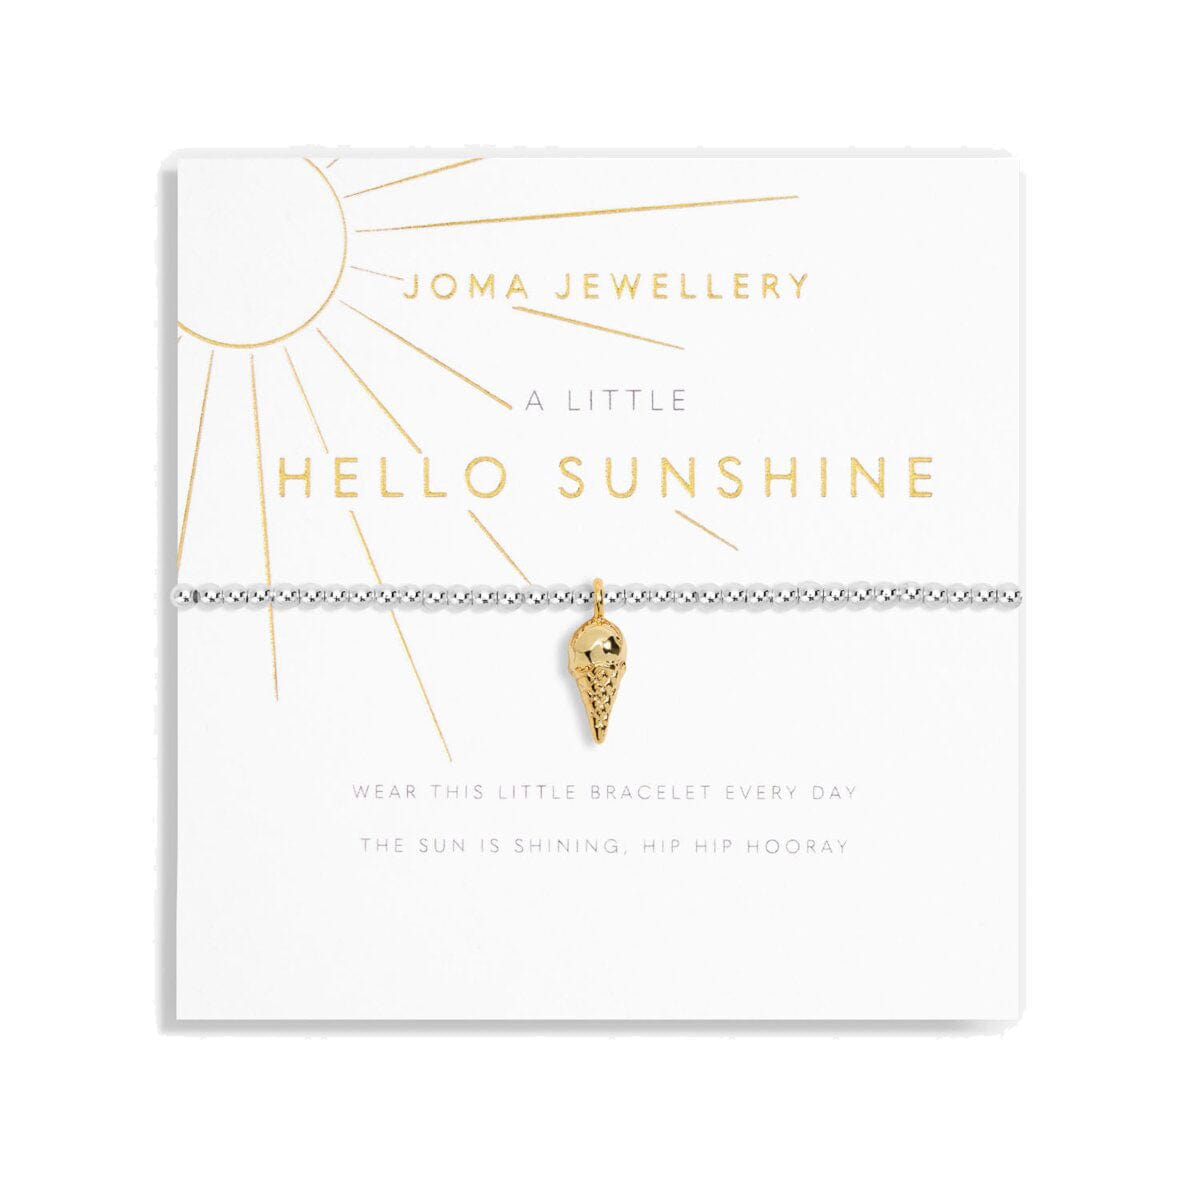 Joma Jewellery Childrens Bracelet Joma Jewellery Children's Bracelet - A Little Hello Sunshine